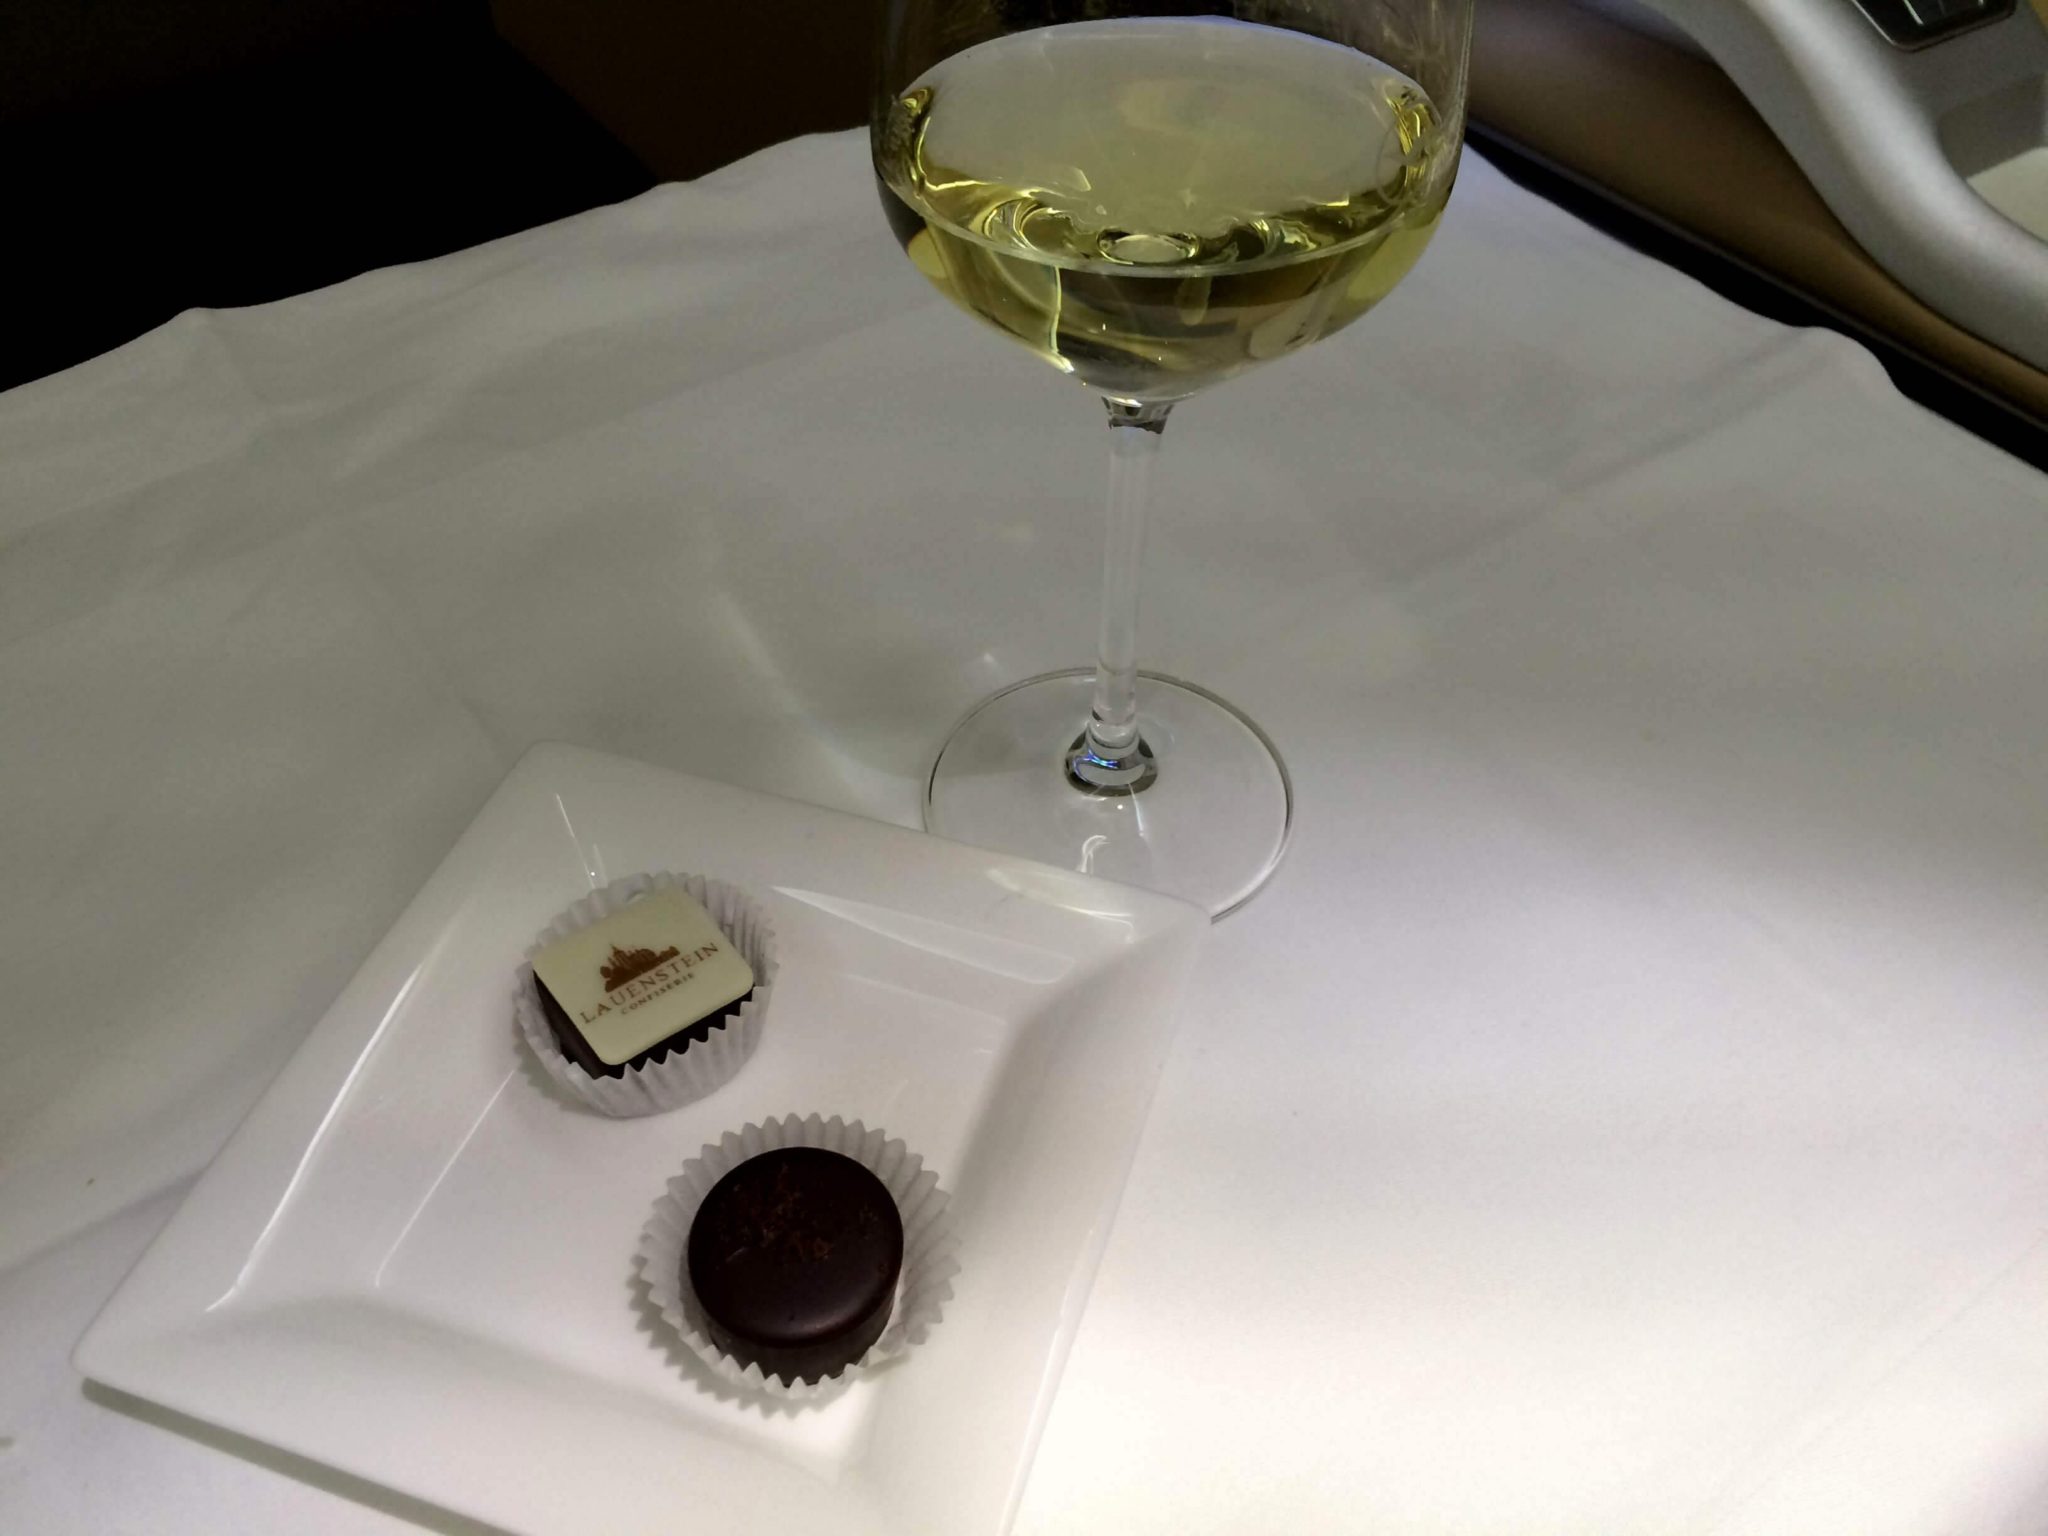 Chocolates y vino dulce, lufthansa first class